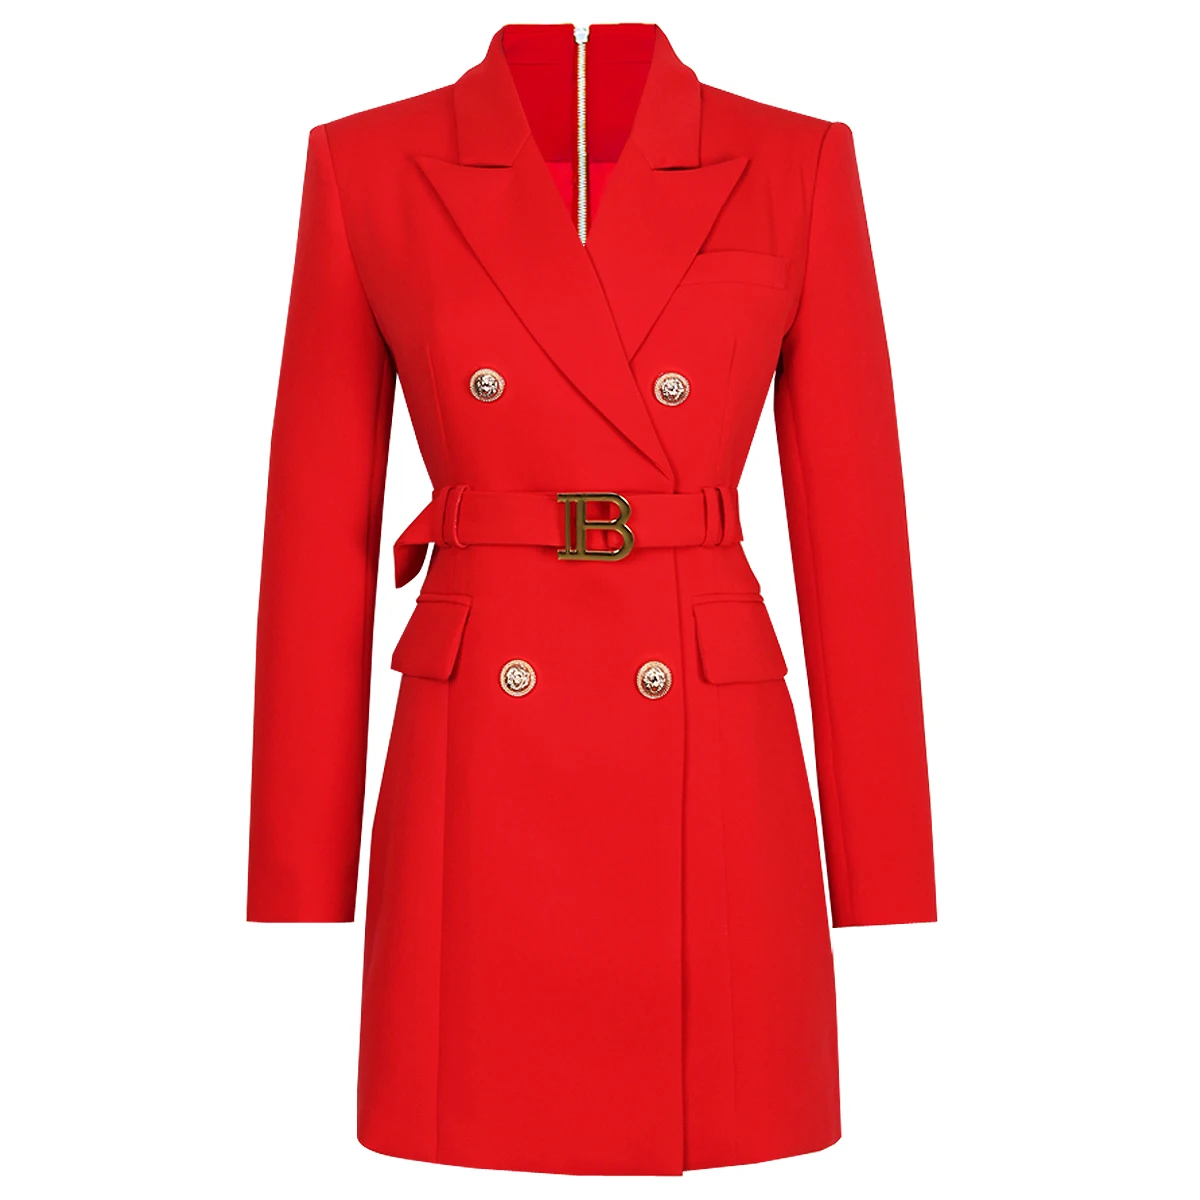 Spring And Autumn High Quality New Fashion Slim Belt Long Sleeve Temperament Commuter Dress Women's BlazerS-3XL